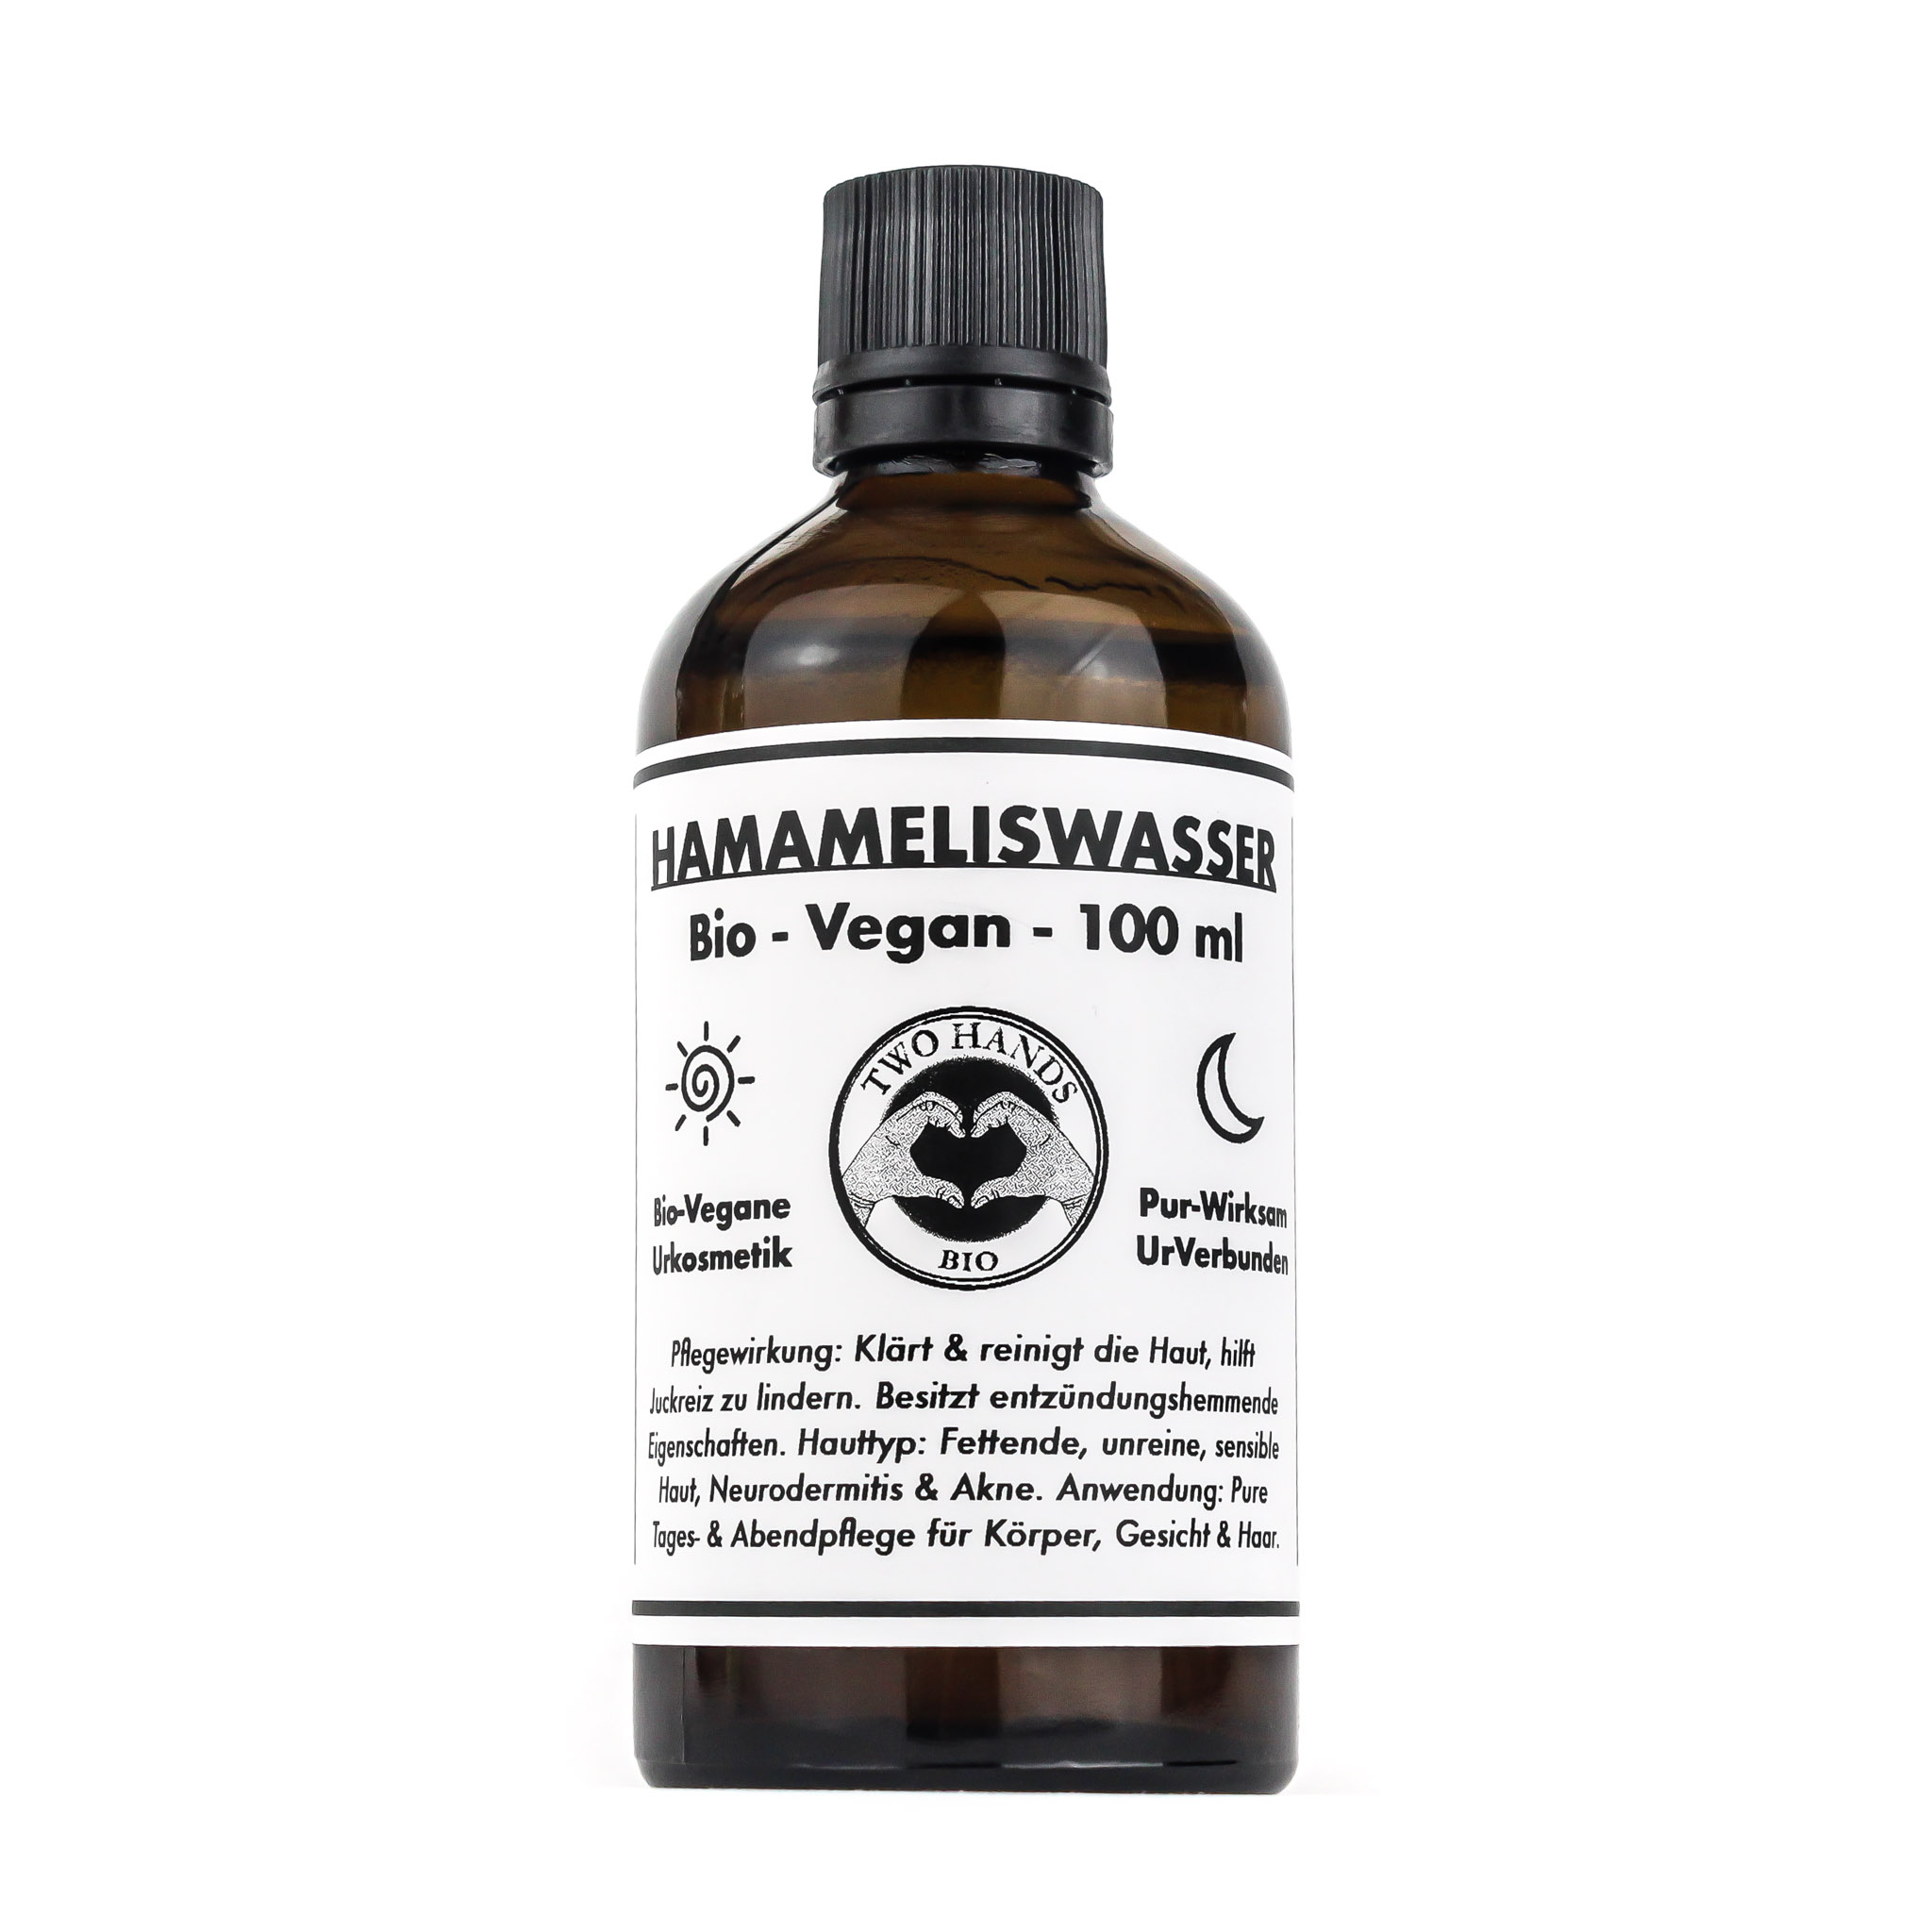 Hamameliswasser - Bio - Vegan - 100 ml